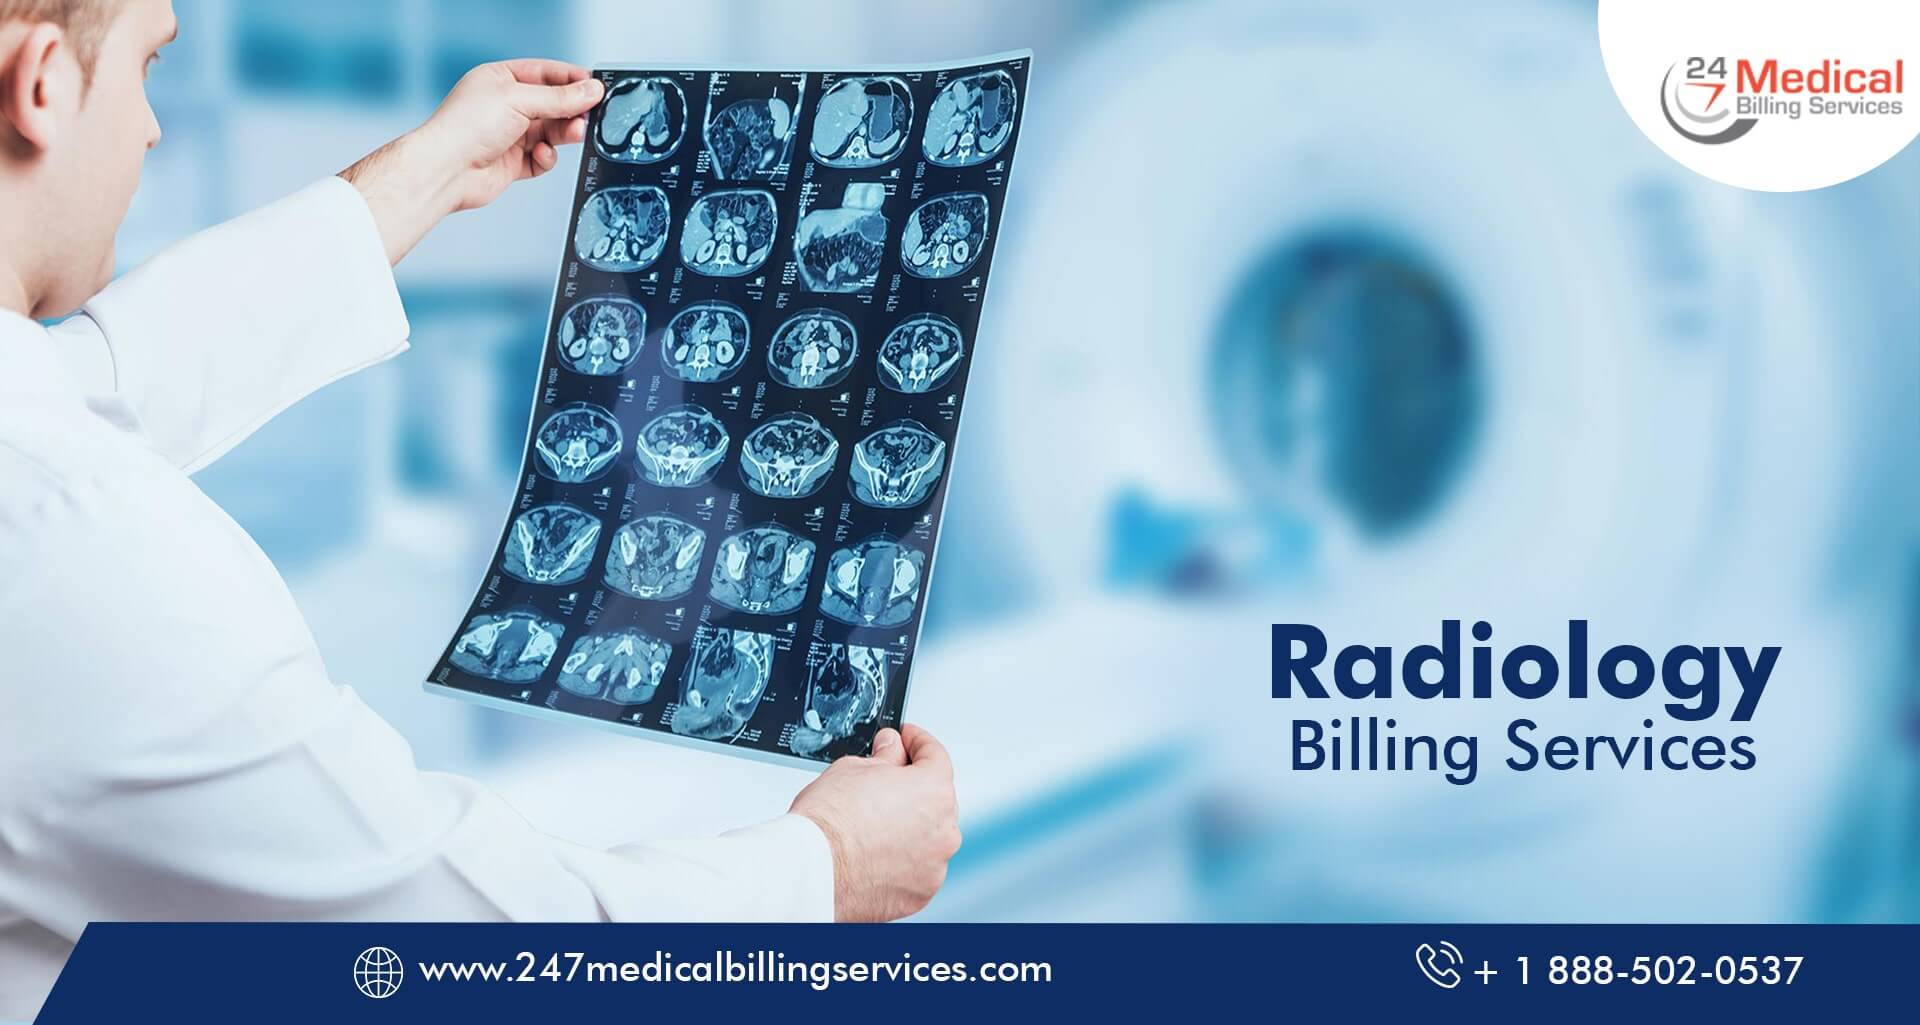 Radiology Billing Services in Tempe, Arizona (AZ) - 24/7 Medical Billing Services